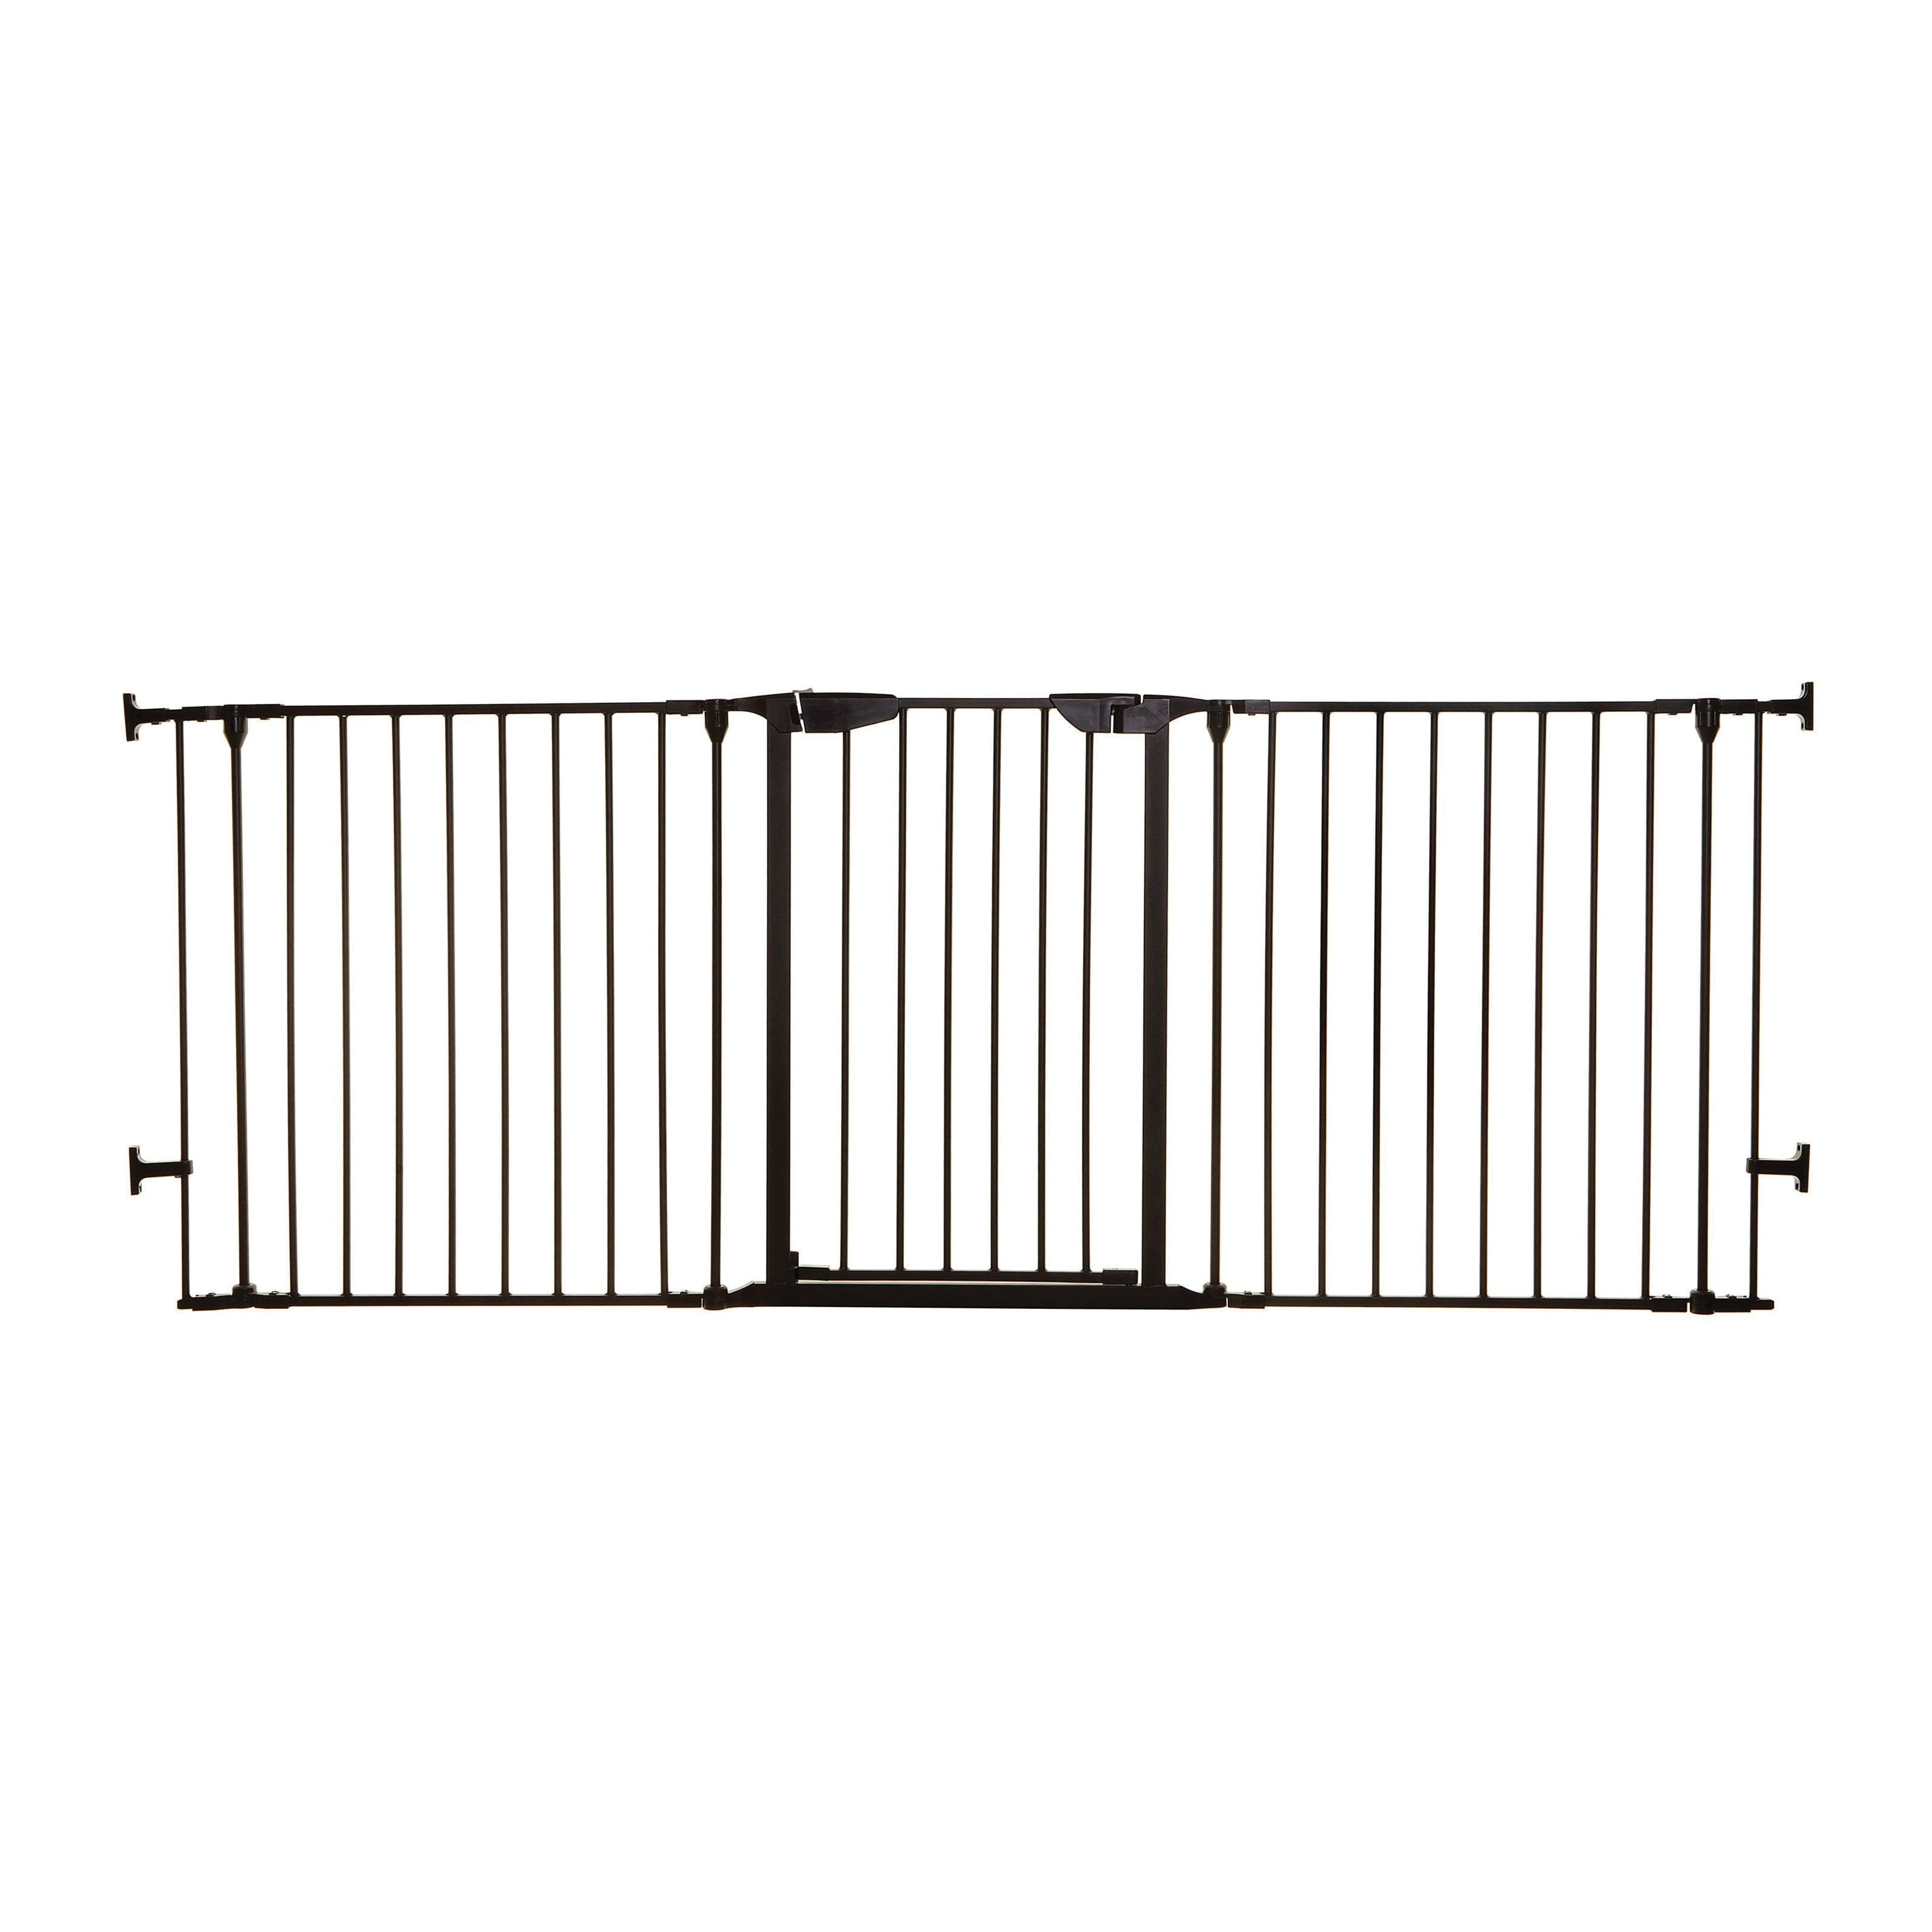 Dreambaby Newport Adapta-Gate L2021 Child Safety Gate, Steel, White, 29 in H Dimensions, Automatic Lock - 2